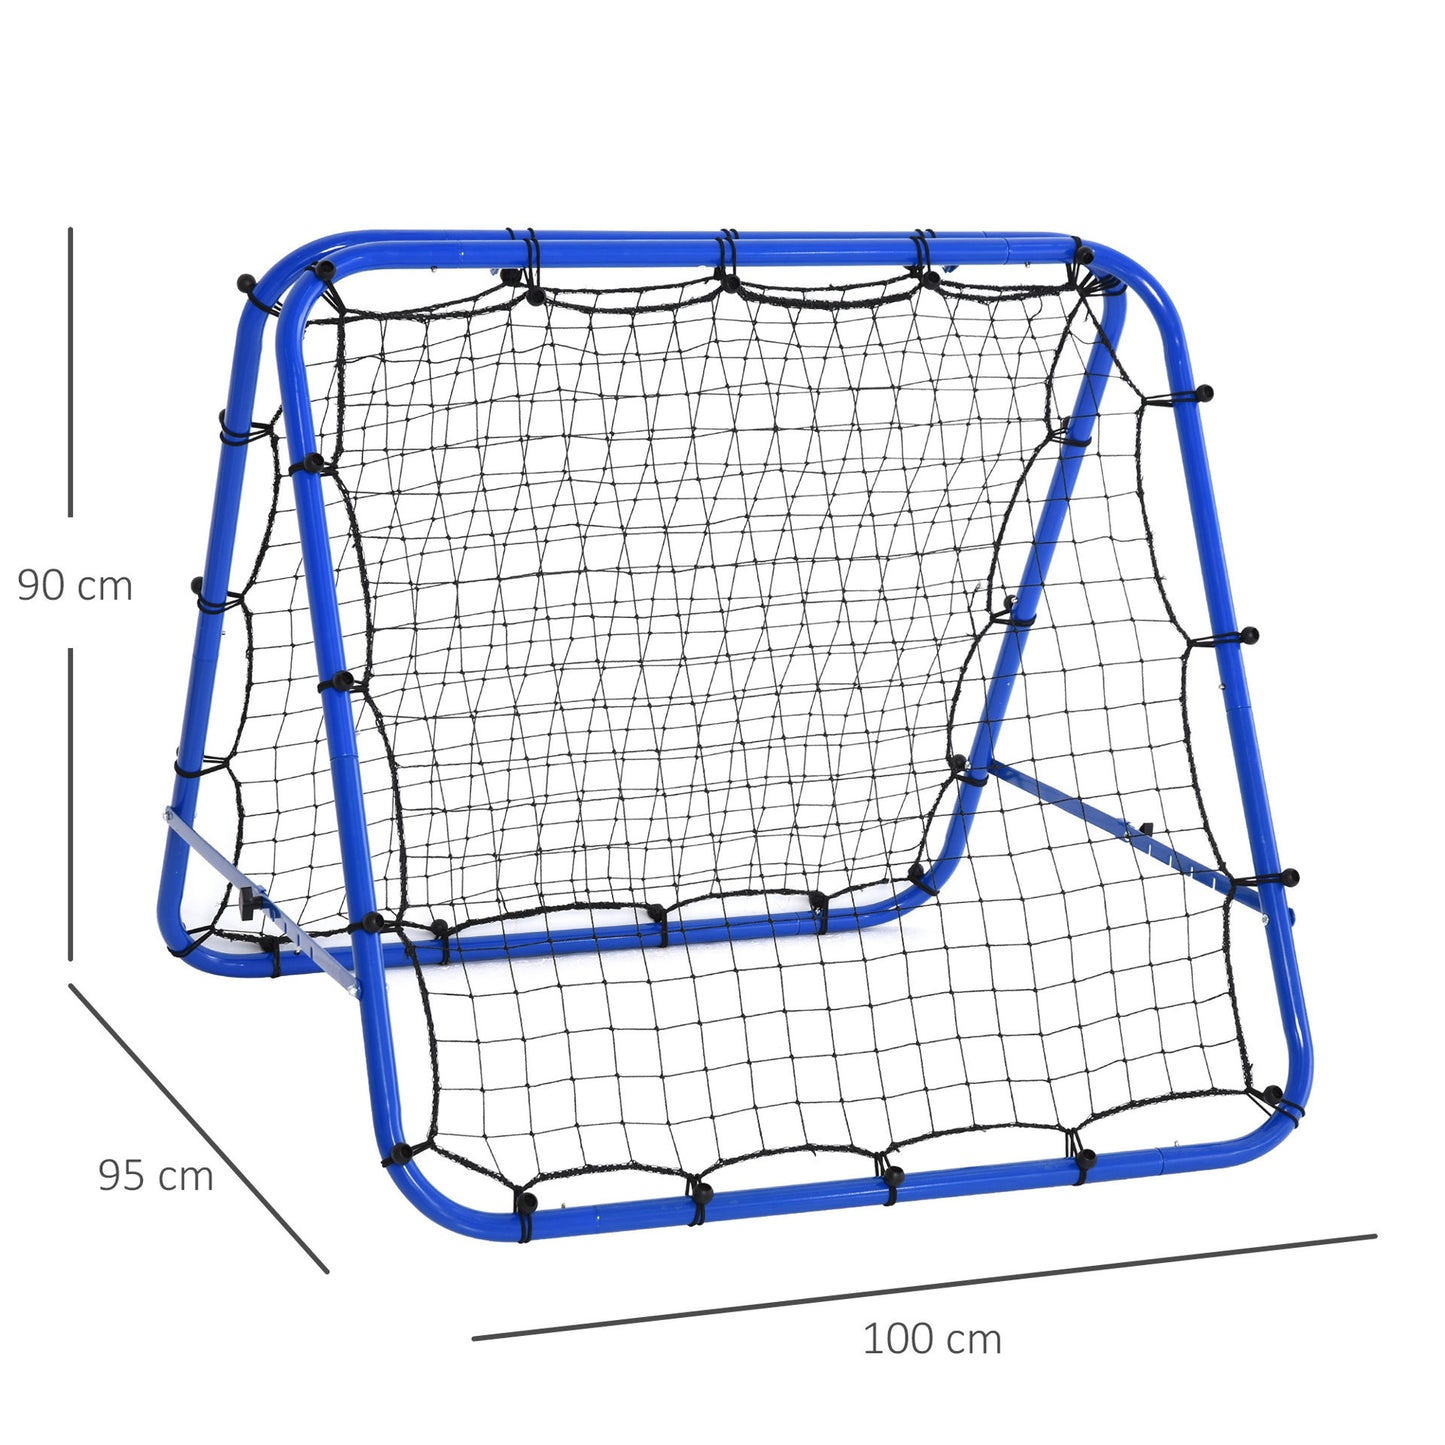 Nancy's Alto Football rebounder Kickback goal Rebound wall Net double-sided rebound Adjustable in 5 levels